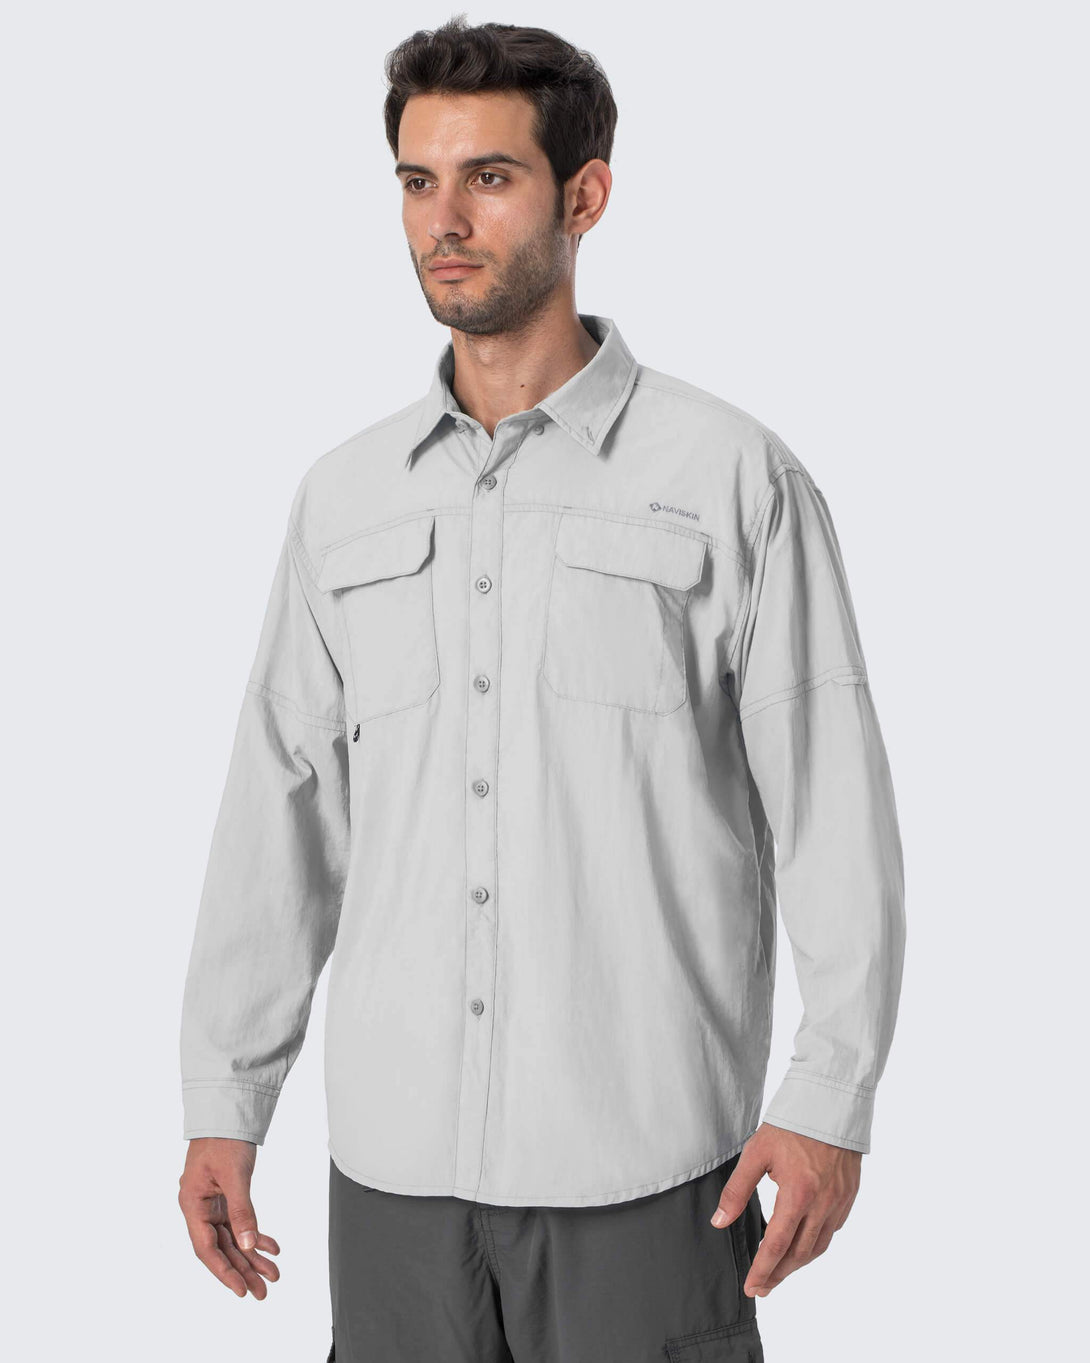 NAVISKIN Men's UPF 50+ Sun Protection Clothing Hiking Fishing Shirt Lightweight Quick Dry SPF Outdoor Long Sleeve Shirt, Grey / X-Large